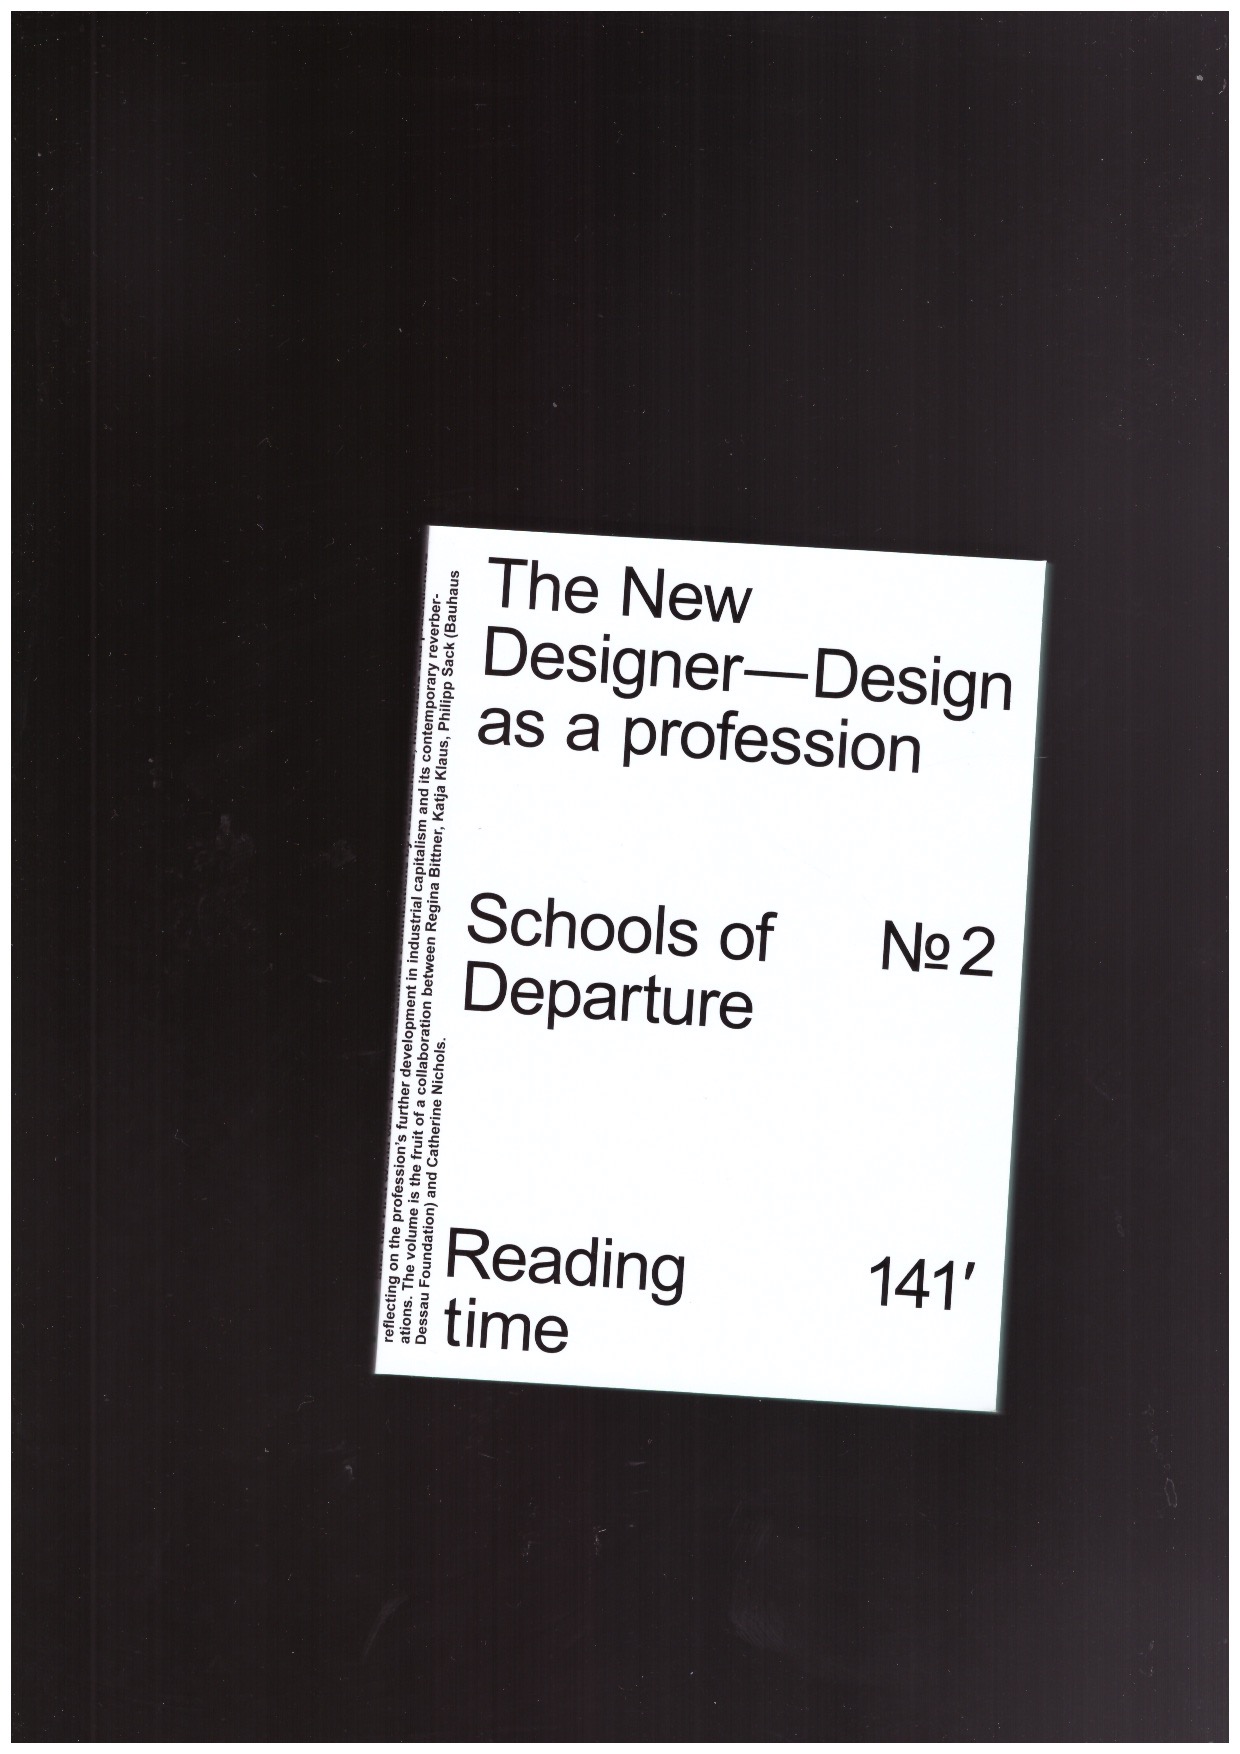 BITTNER, Regina; KLAUS, Katja; NICHOLS, Catherine; SACK, Philipp - Schools of Departure No. 2: The New Designer / Design as a profession